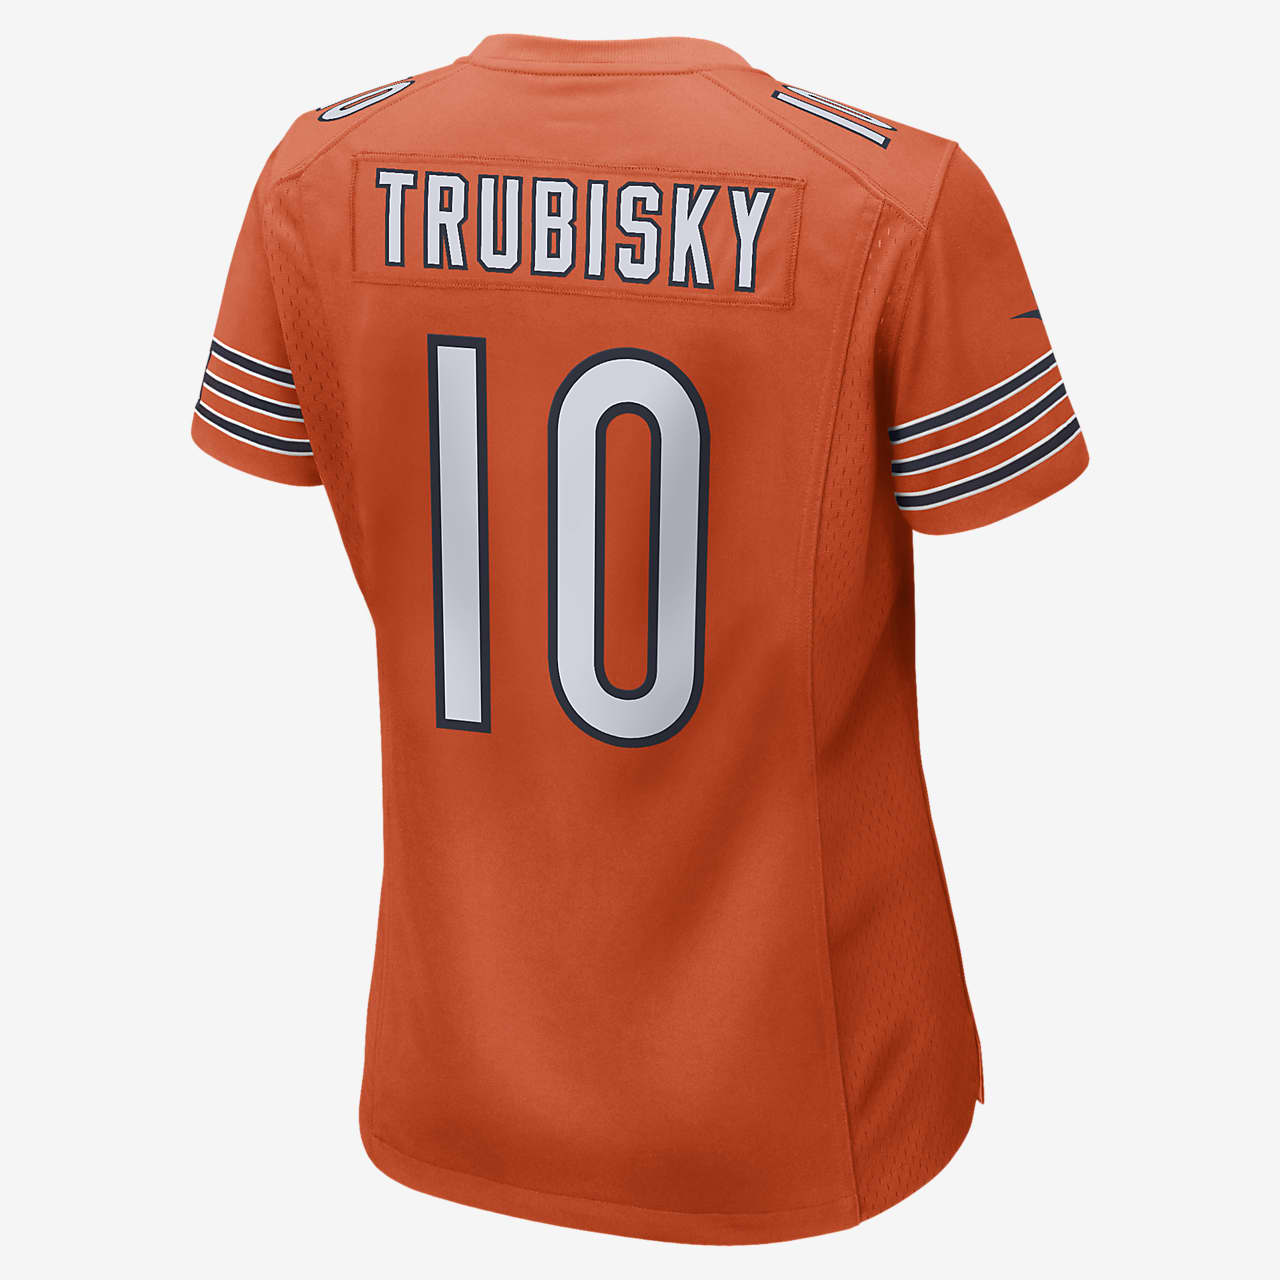 orange mitchell trubisky jersey